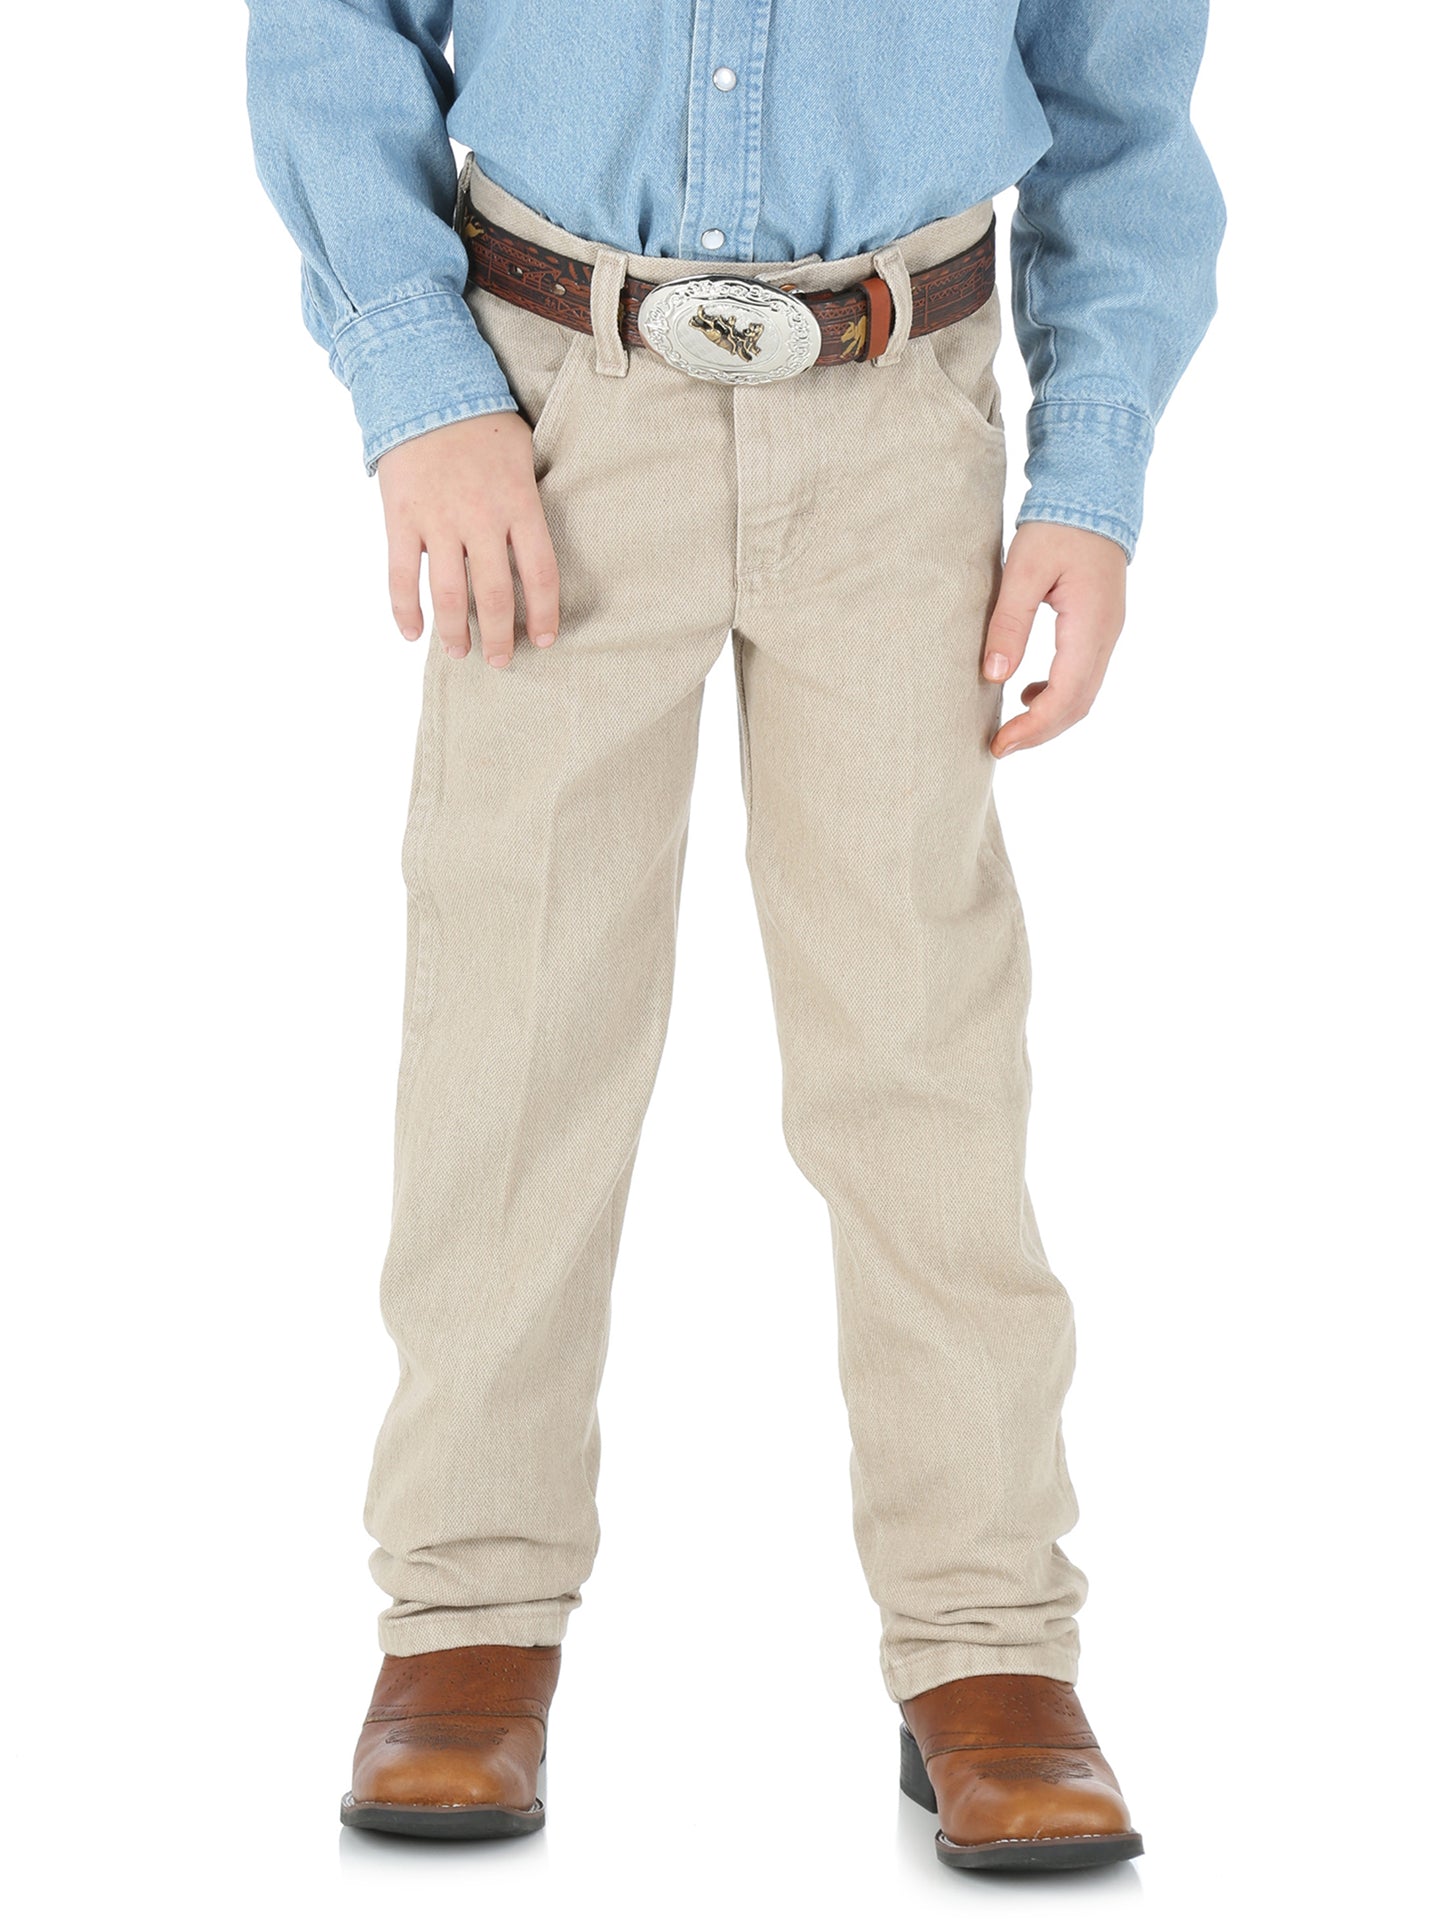 Toddler Boy’s Wrangler Cowboy Cut Tan Original Fit Jean (1-3)